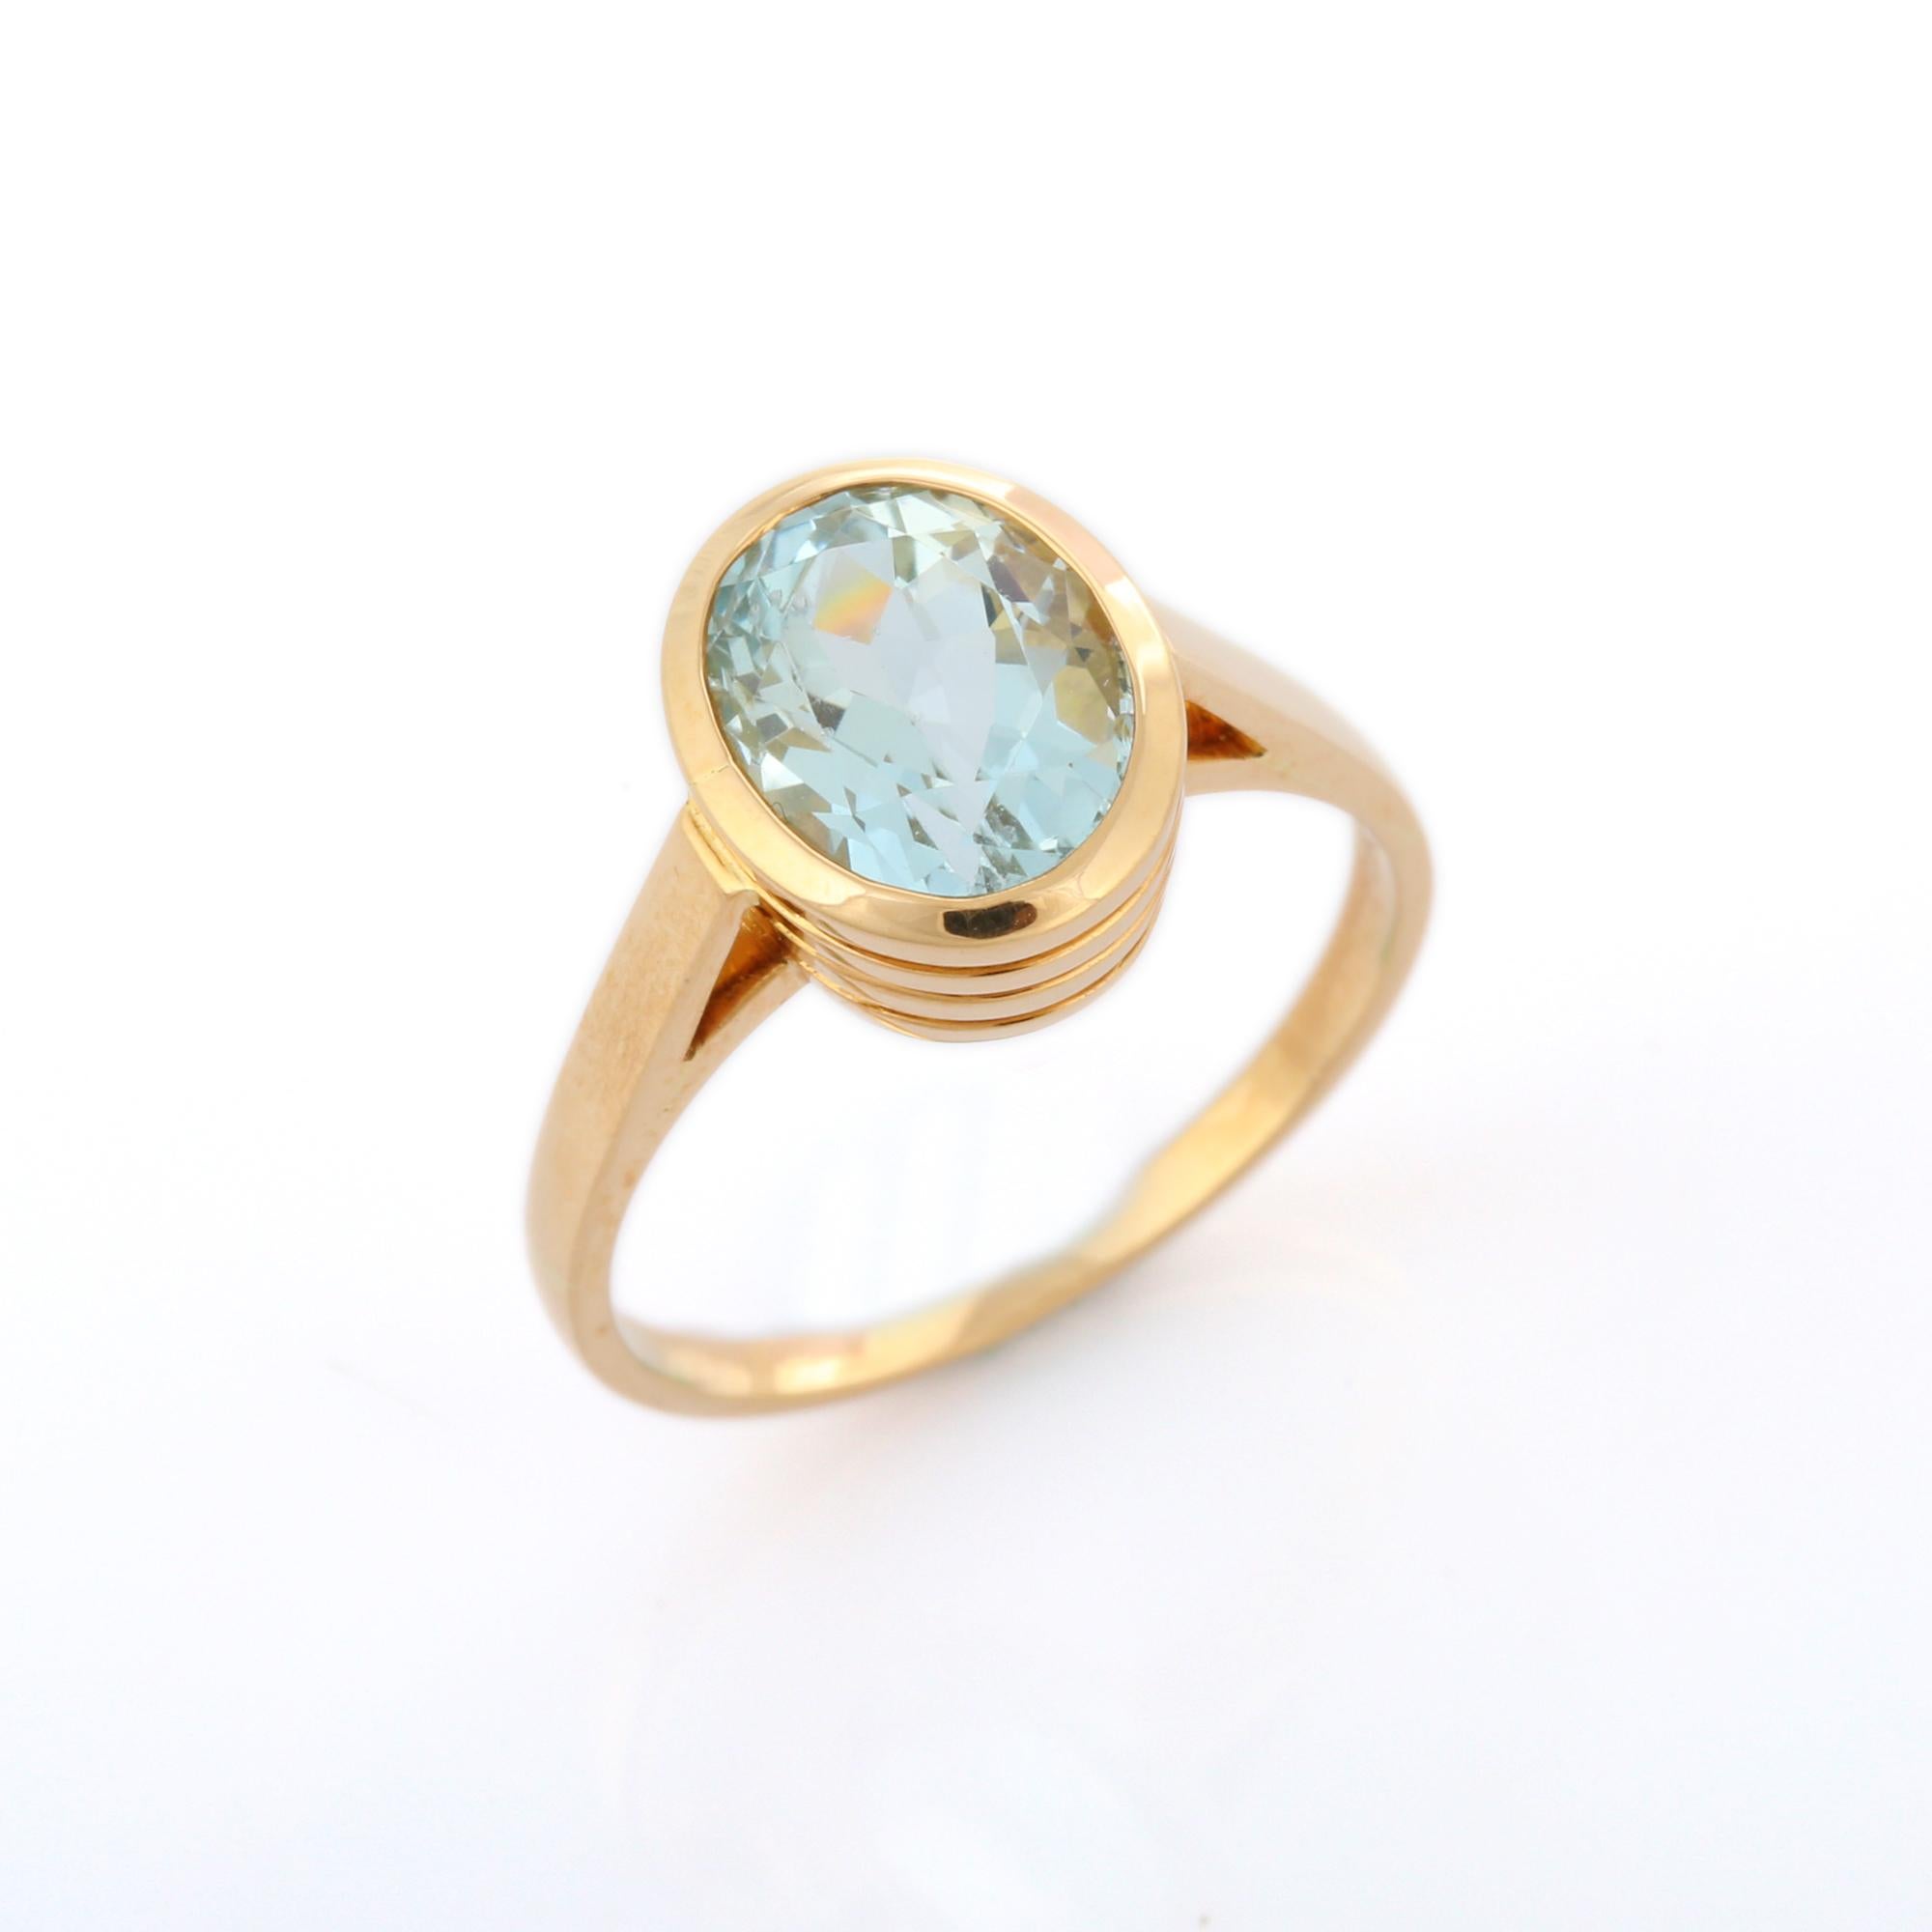 For Sale:  18K Solid Yellow Gold 2.55 ct Oval Cut Aquamarine Gemstone Ring, Aquamarine Ring 6